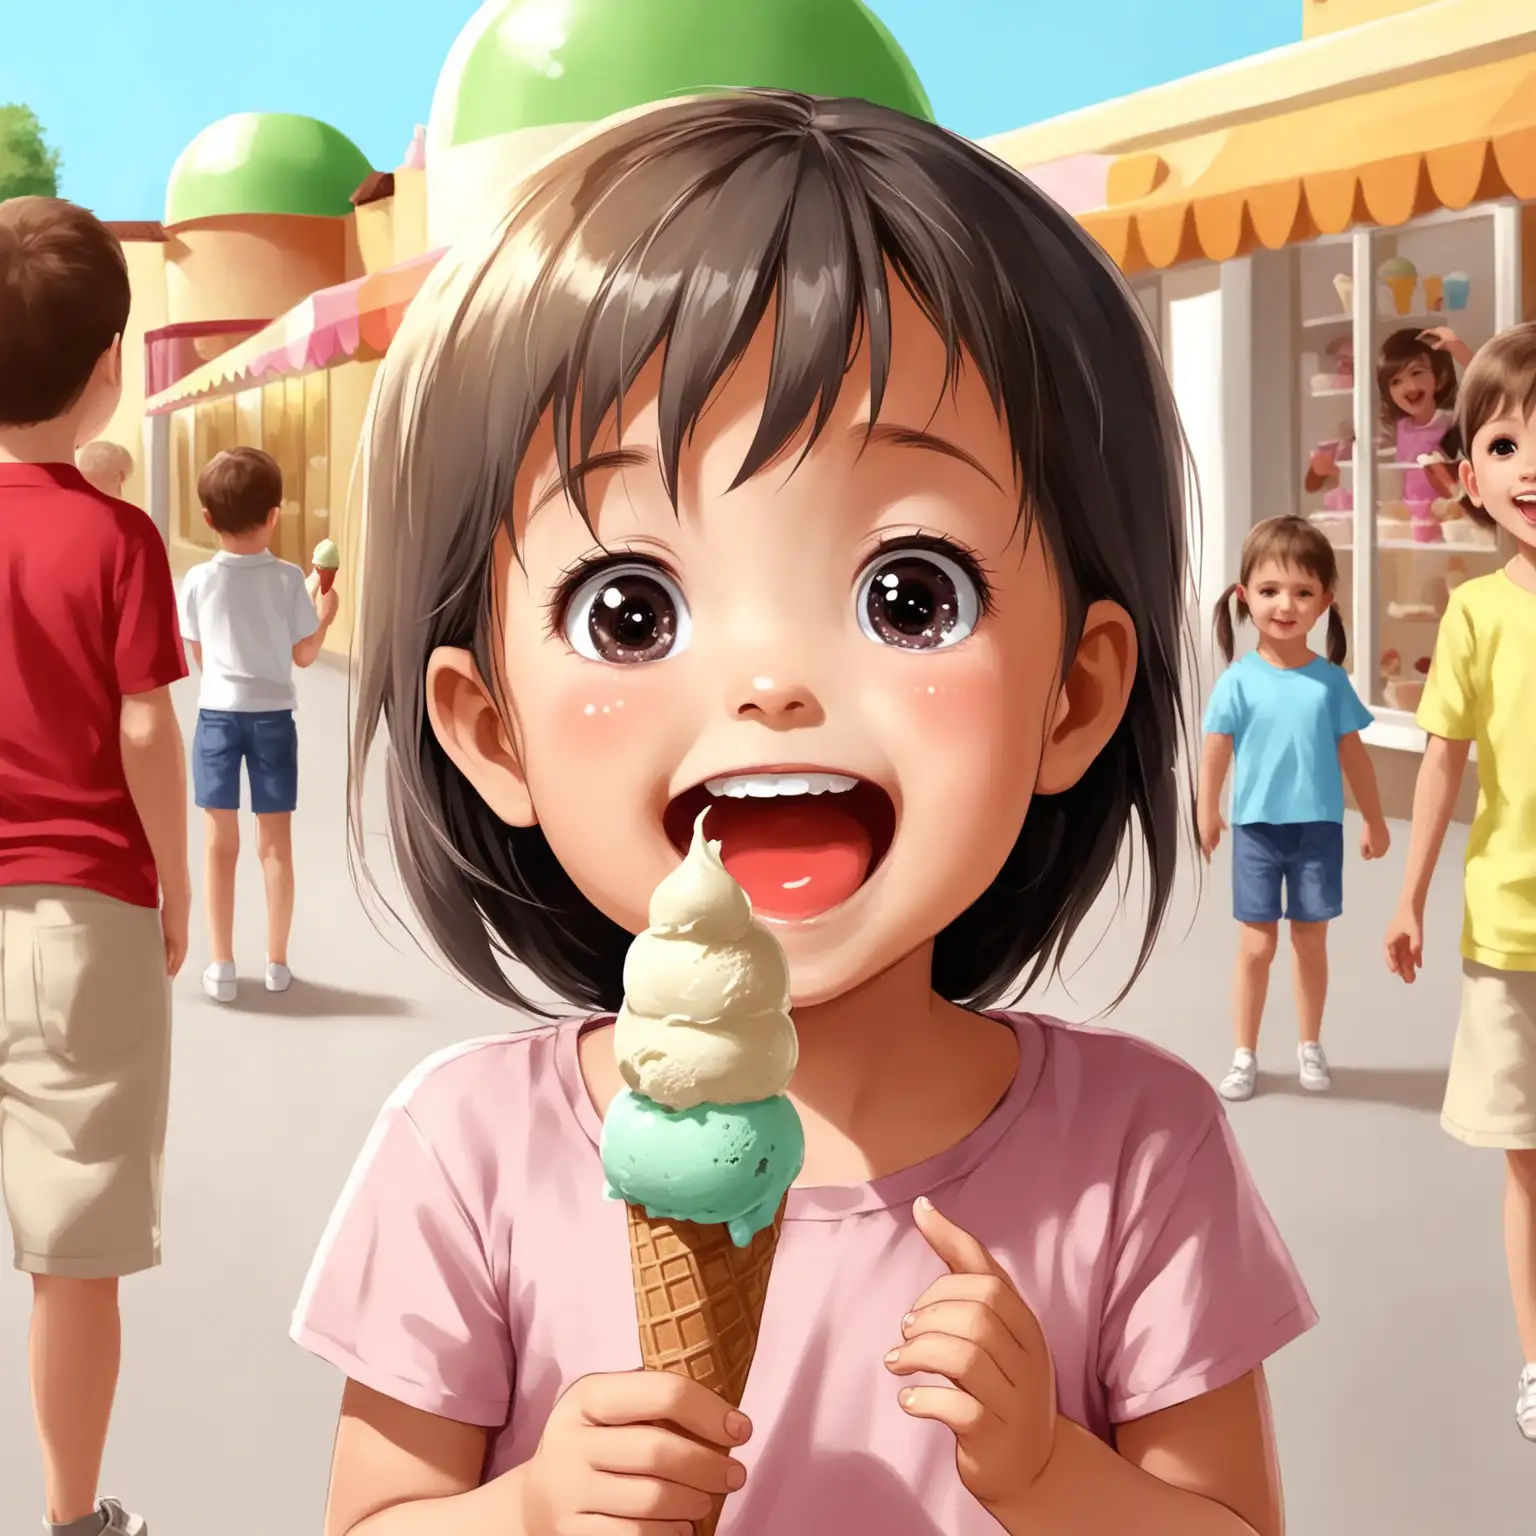 Joyful Child Enjoying Ice Cream Delightfully